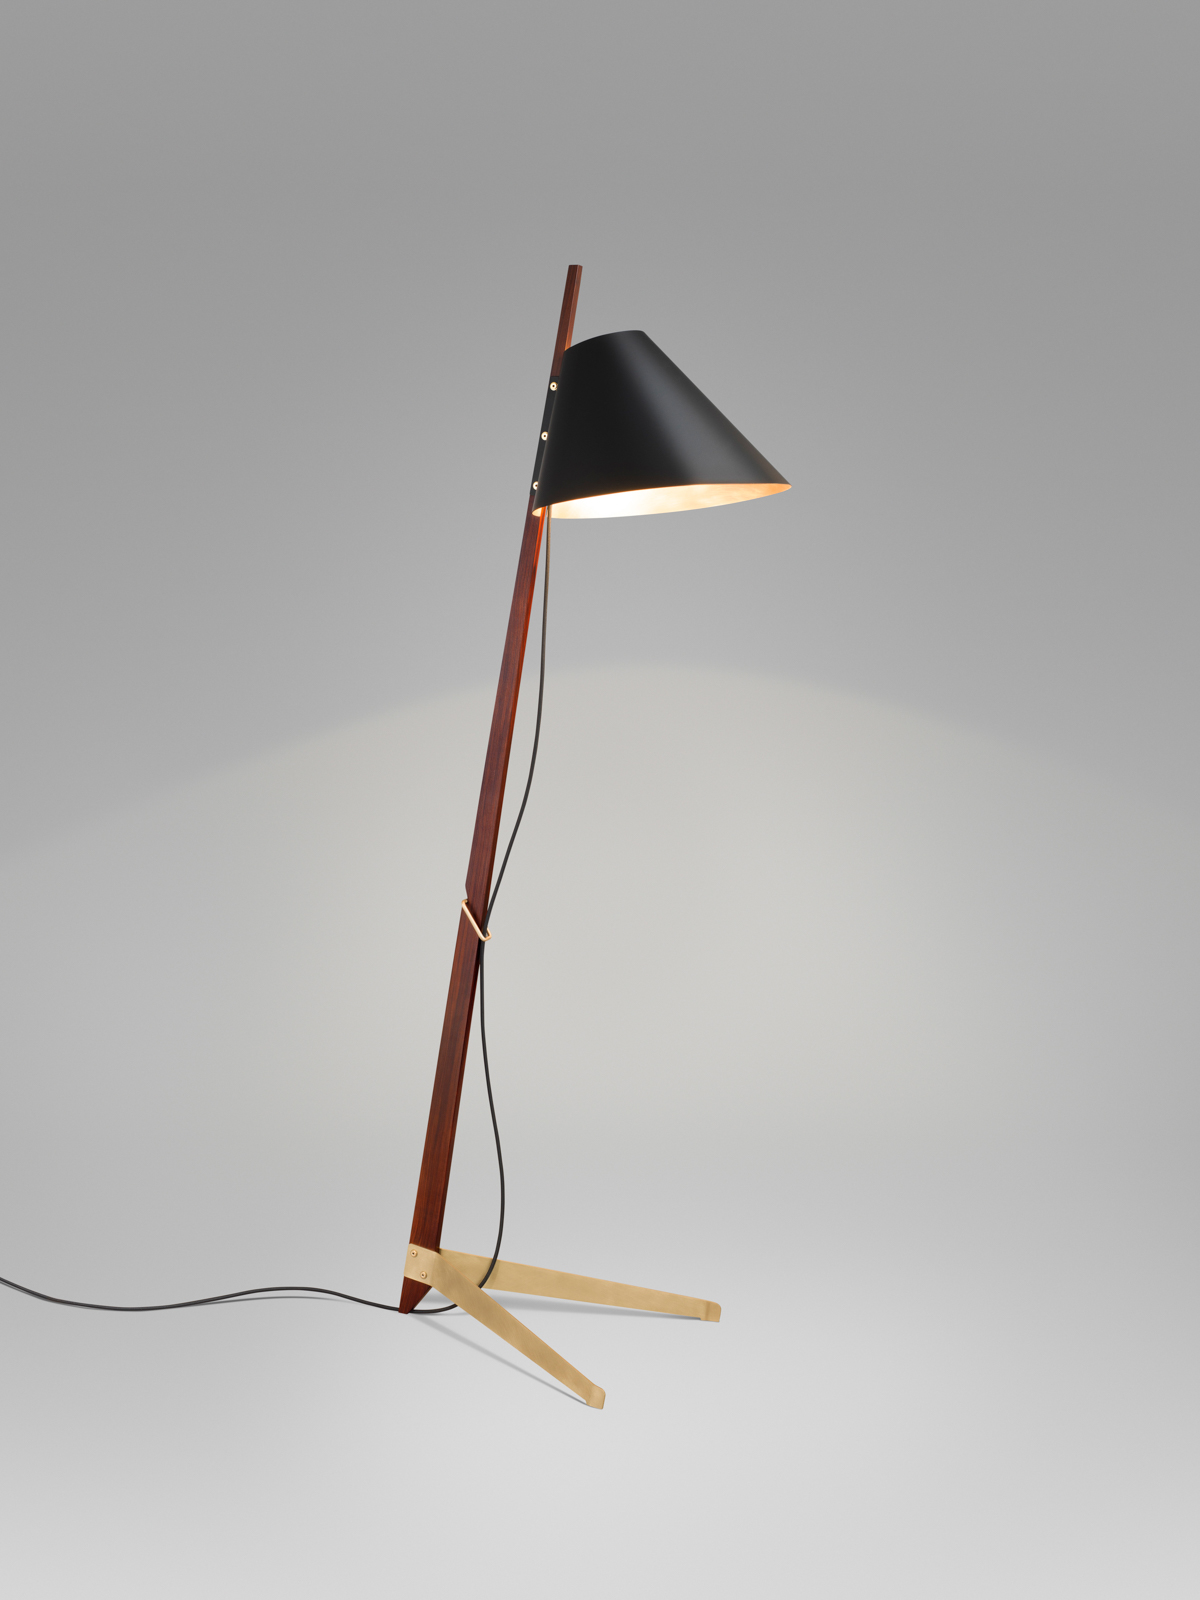 The Billy BL Lamp Series by Studioilse for Kalmar Werkstätten